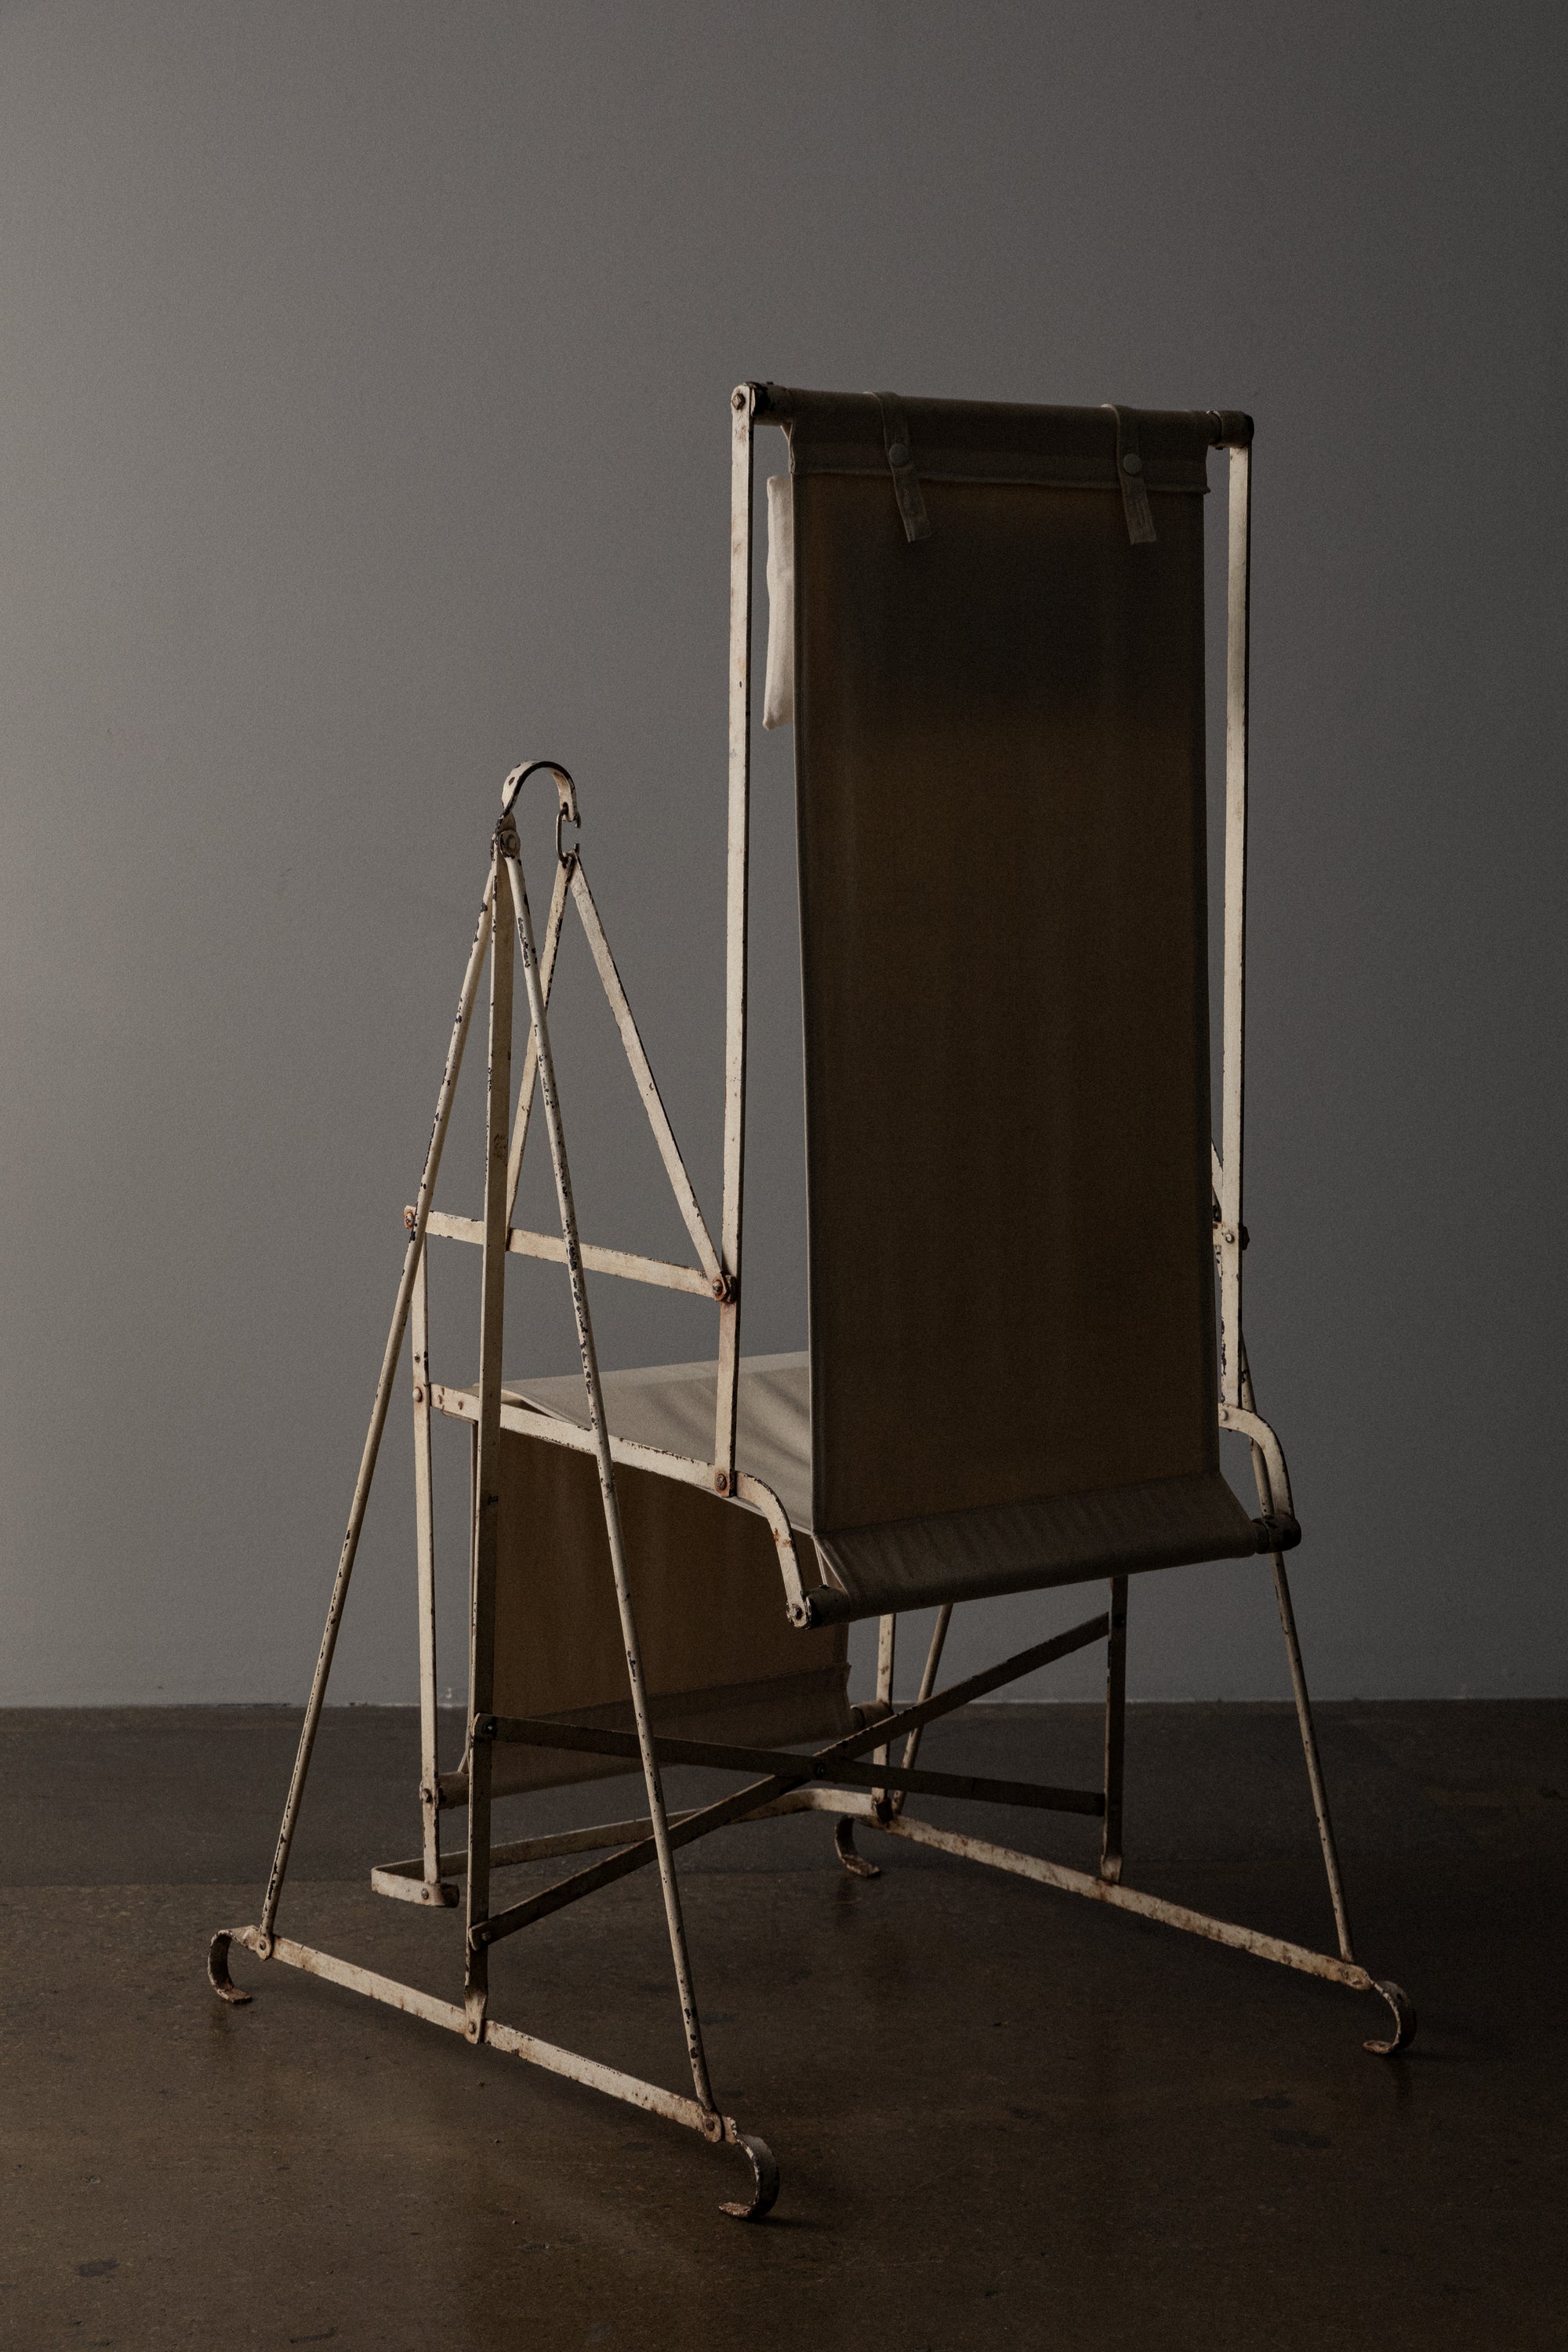 "2:30 Chair" by Ernest Trova